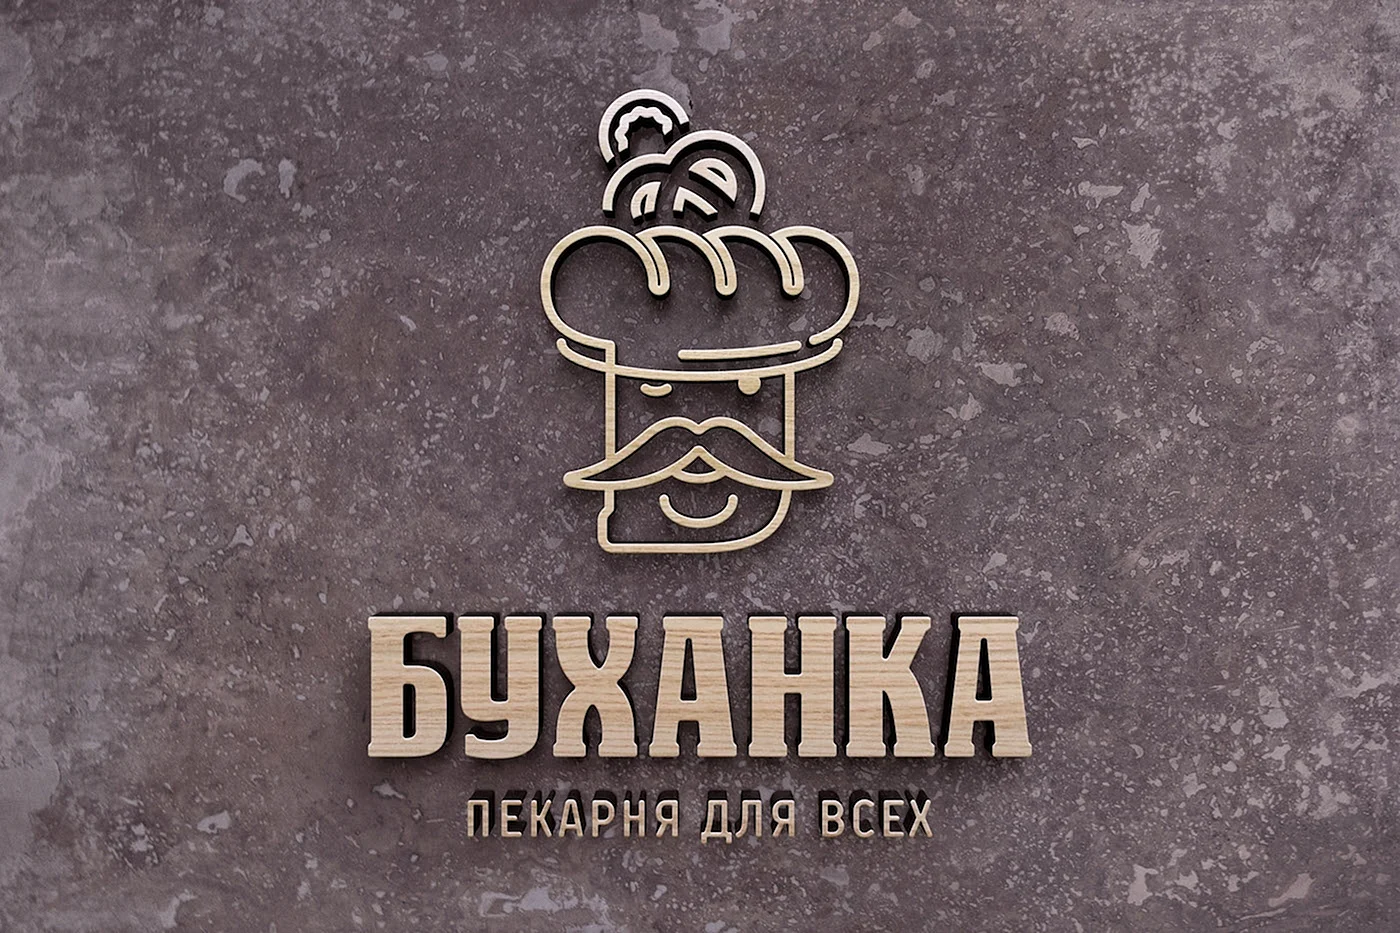 Фирменный логотип пекарни